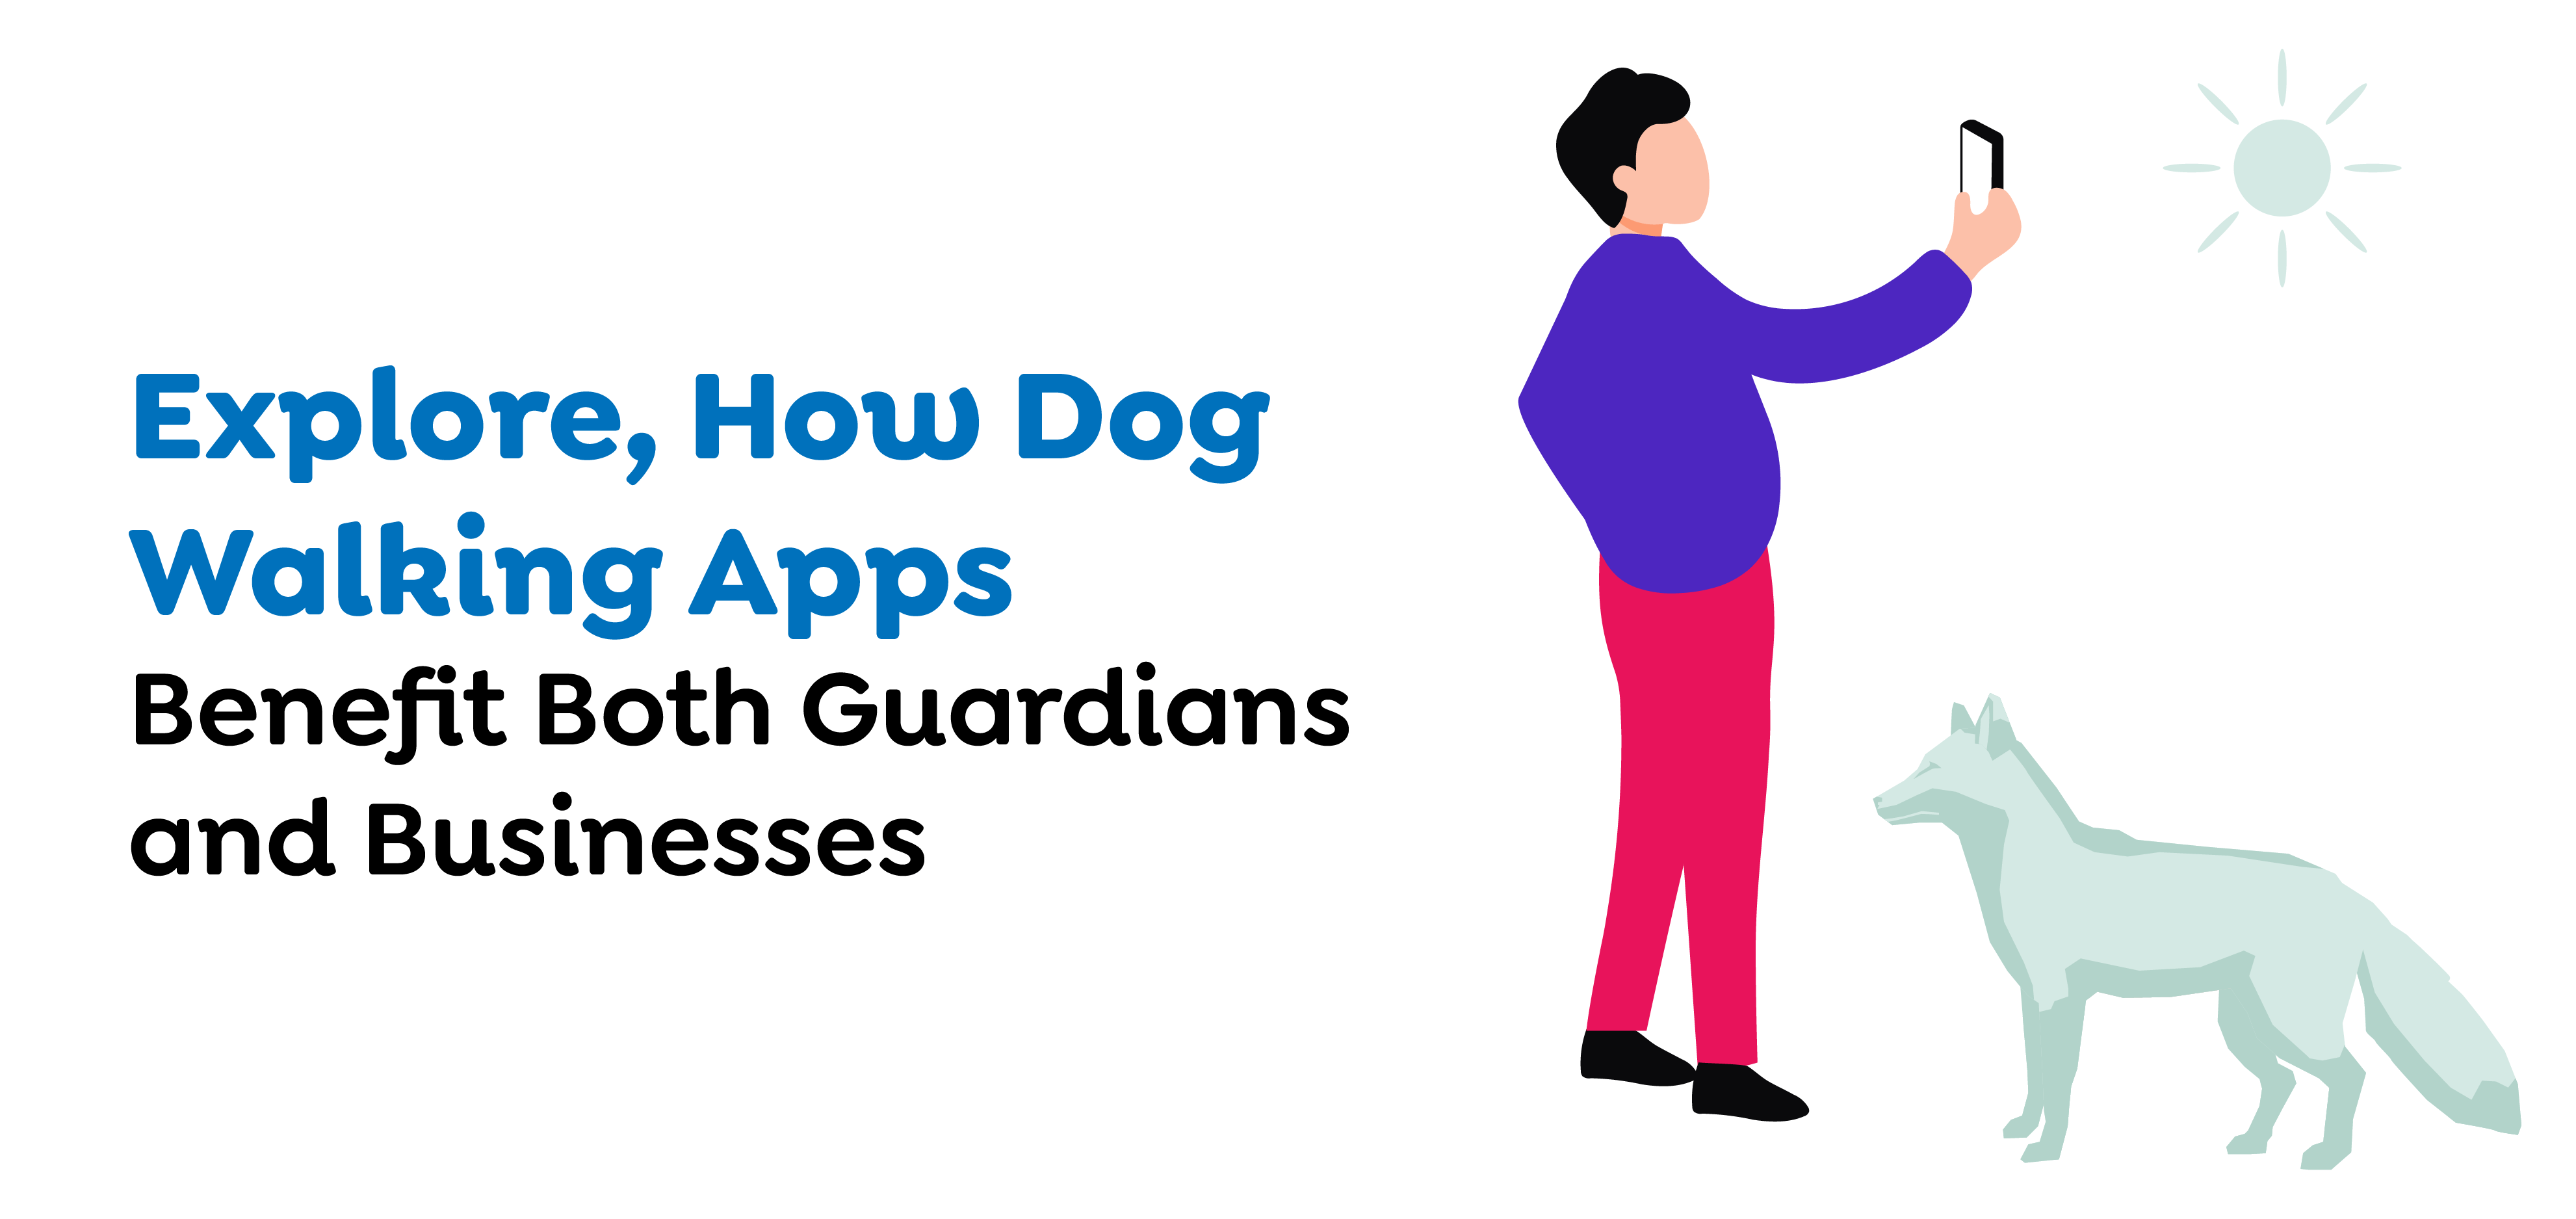 Dog-Walking Apps